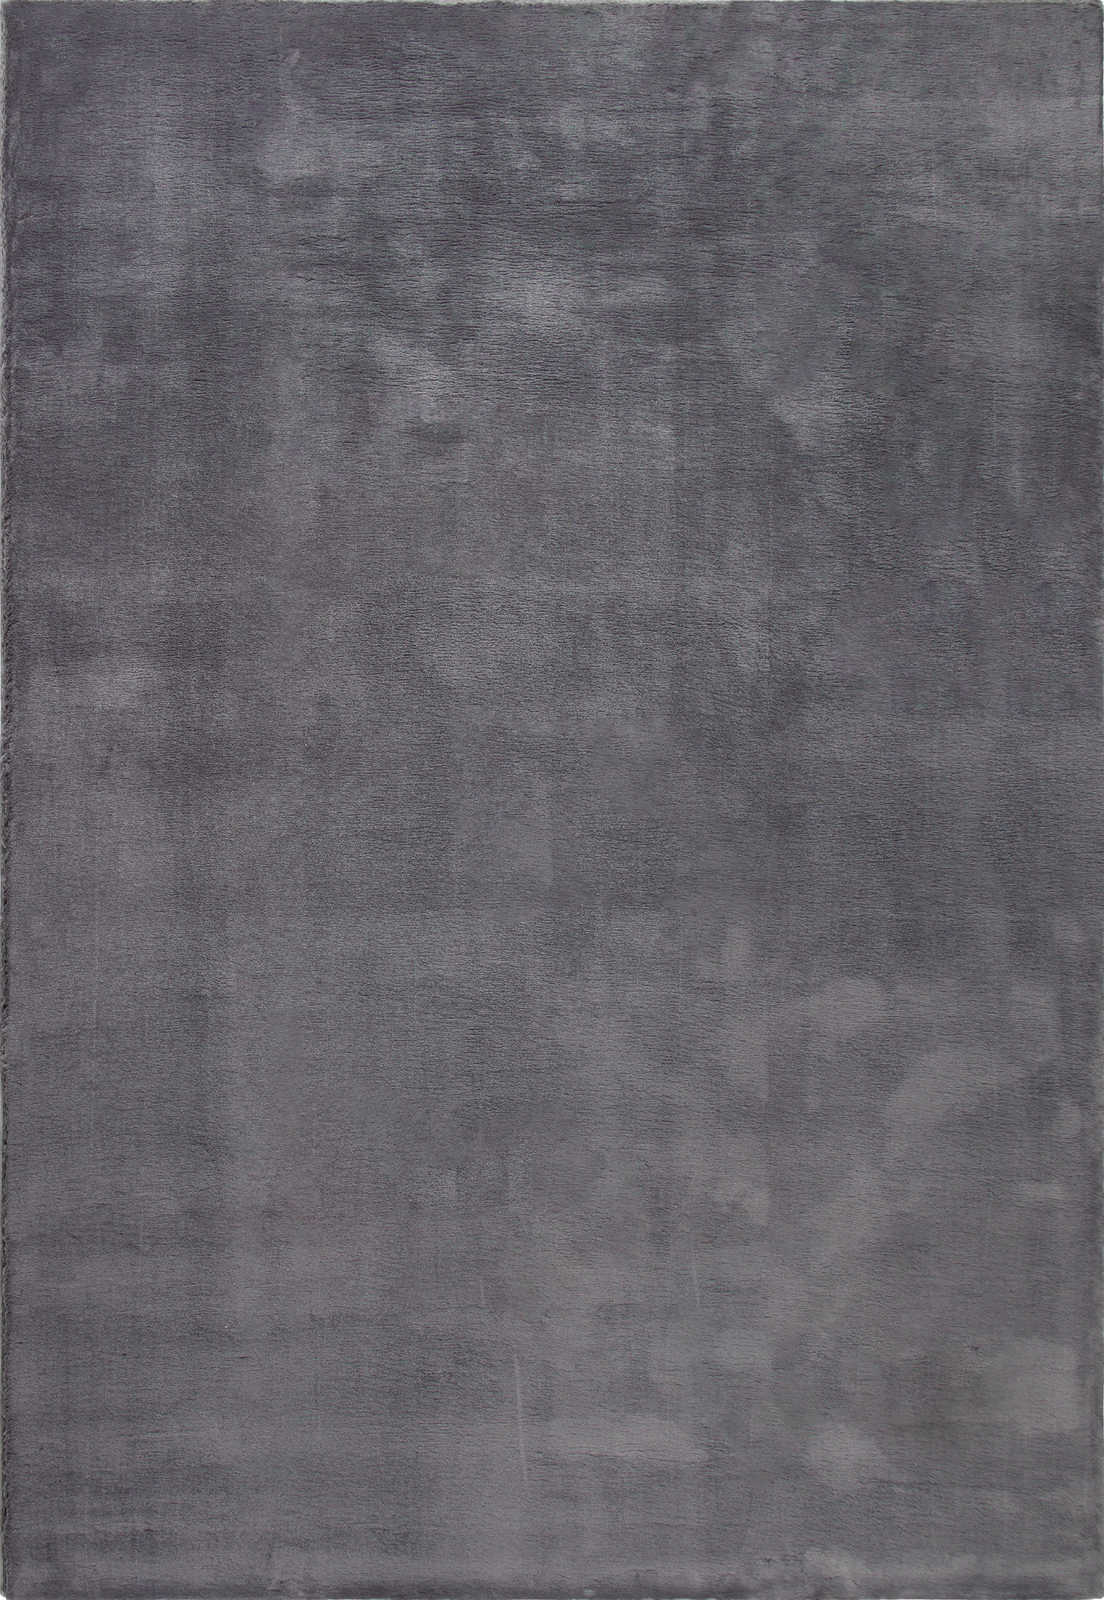             Modern high pile carpet in anthracite - 230 x 160 cm
        